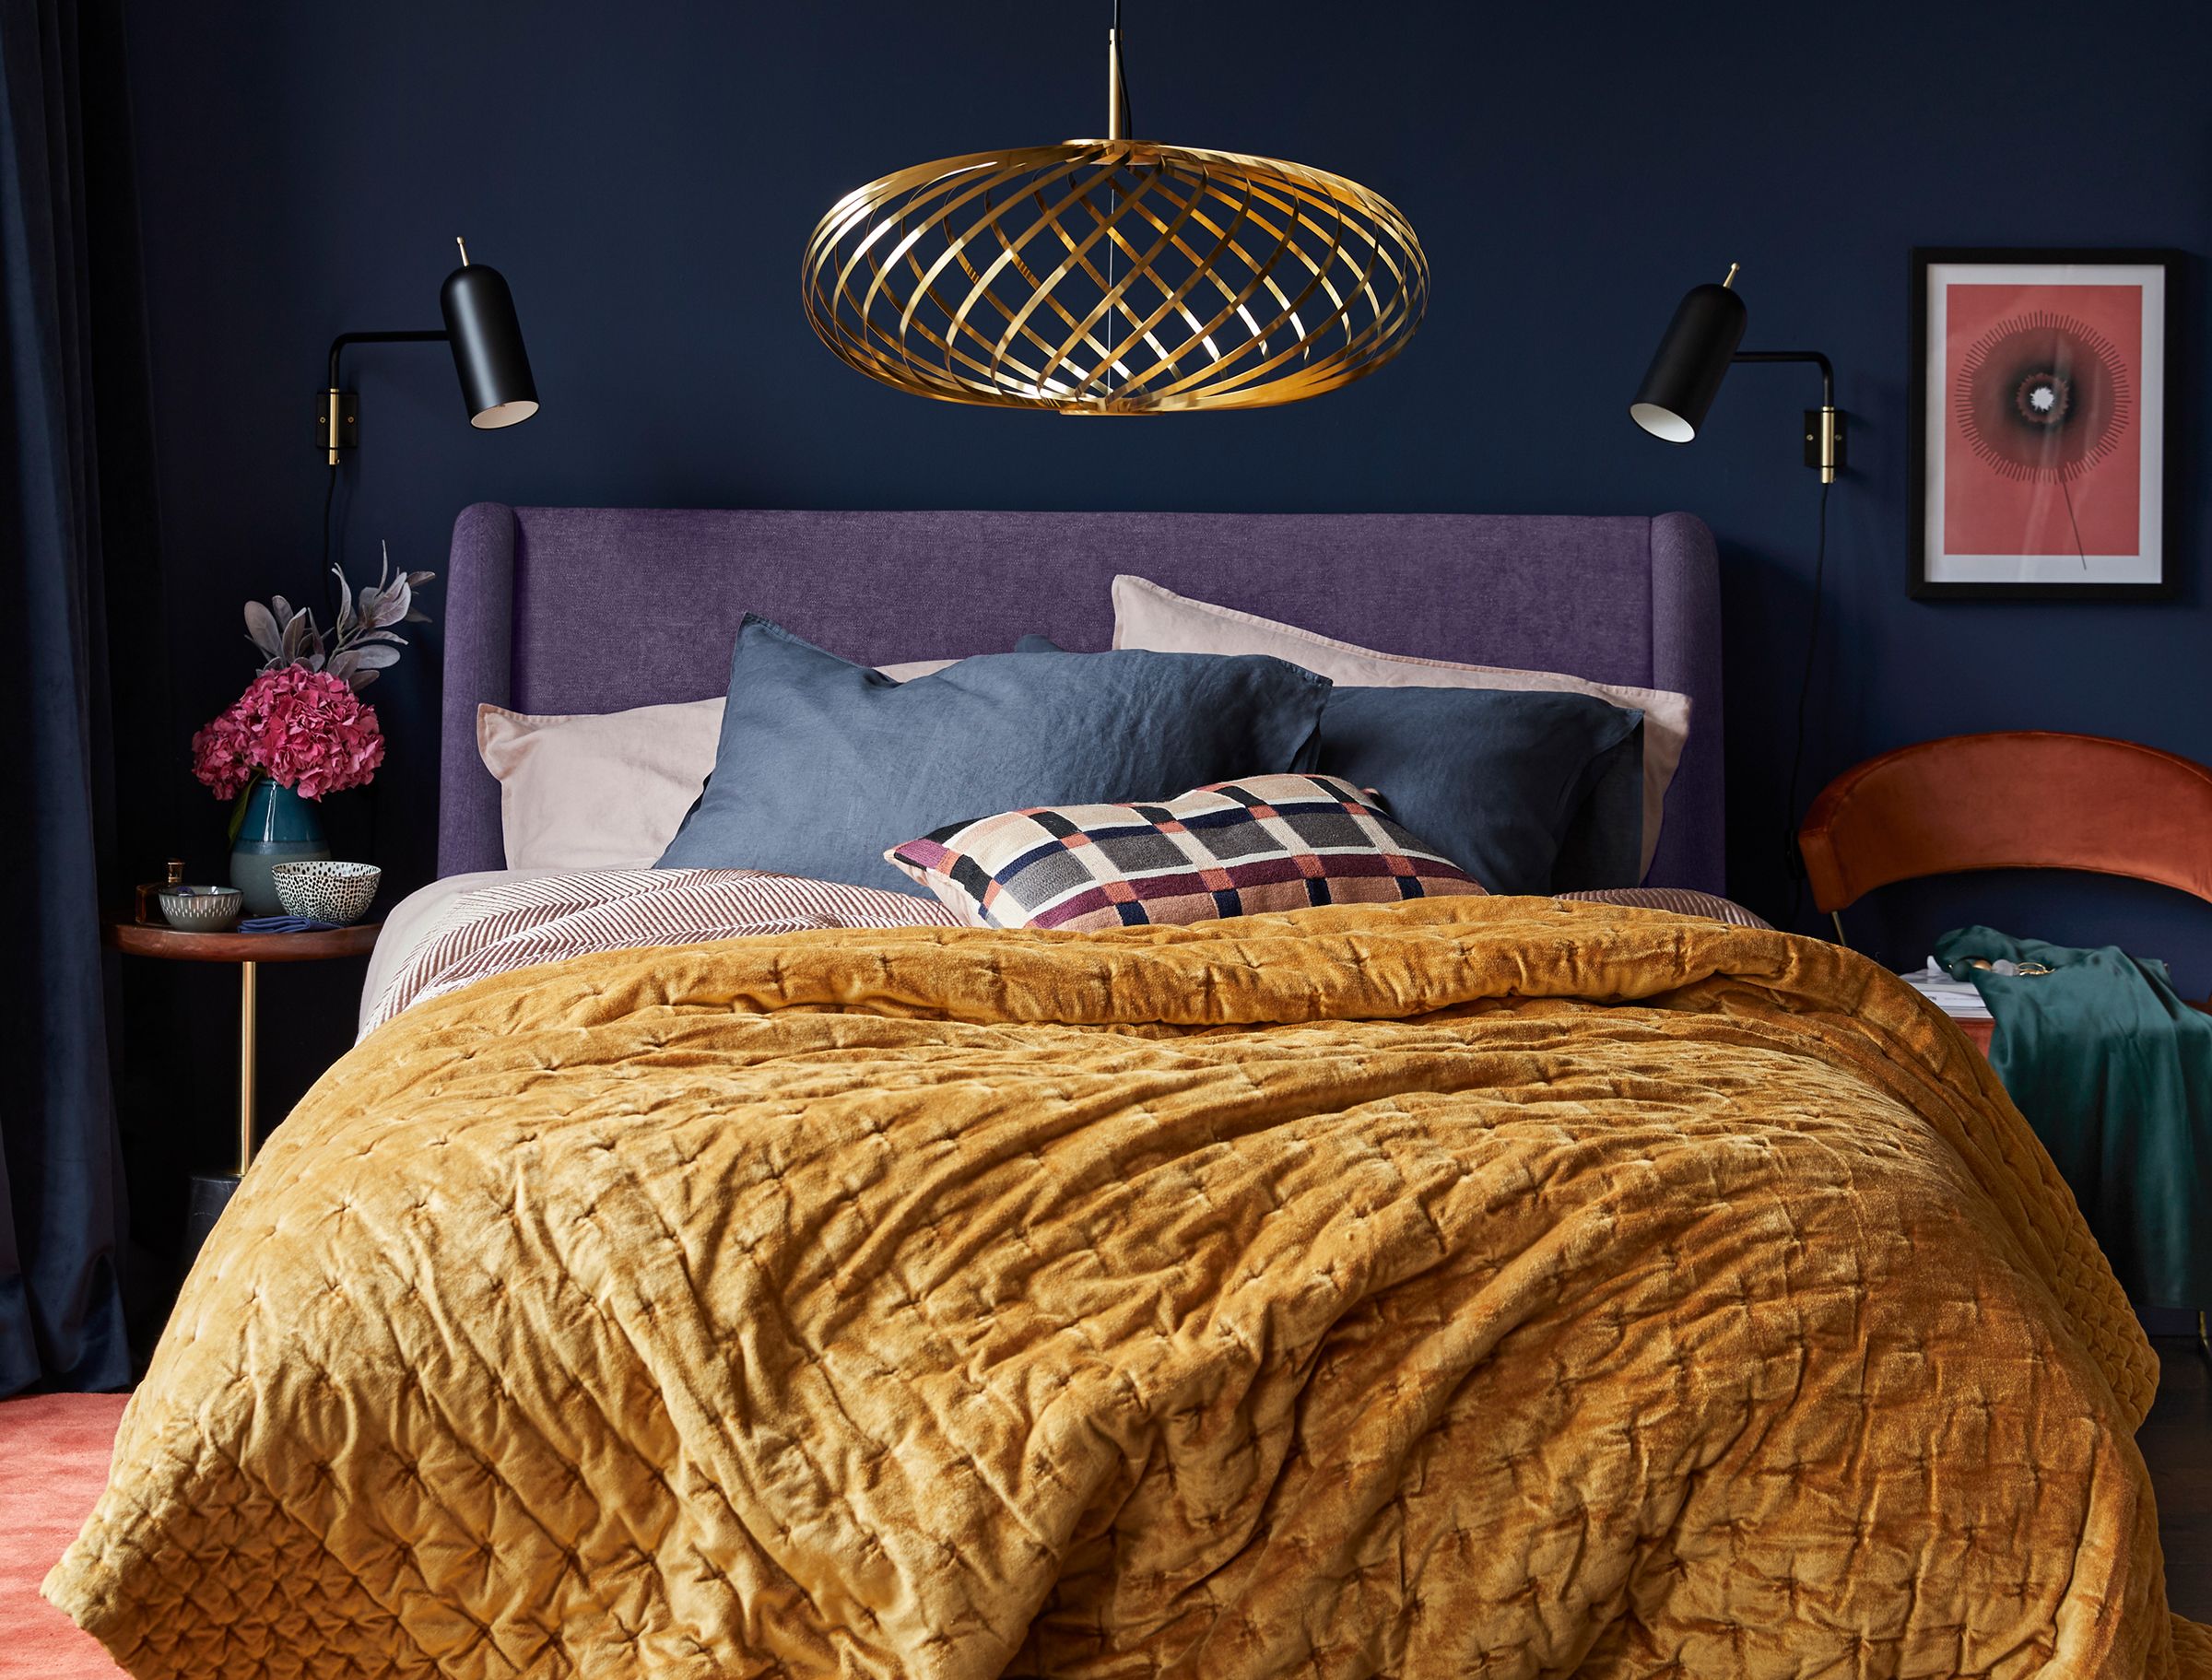 Create a colour-confident bedroom